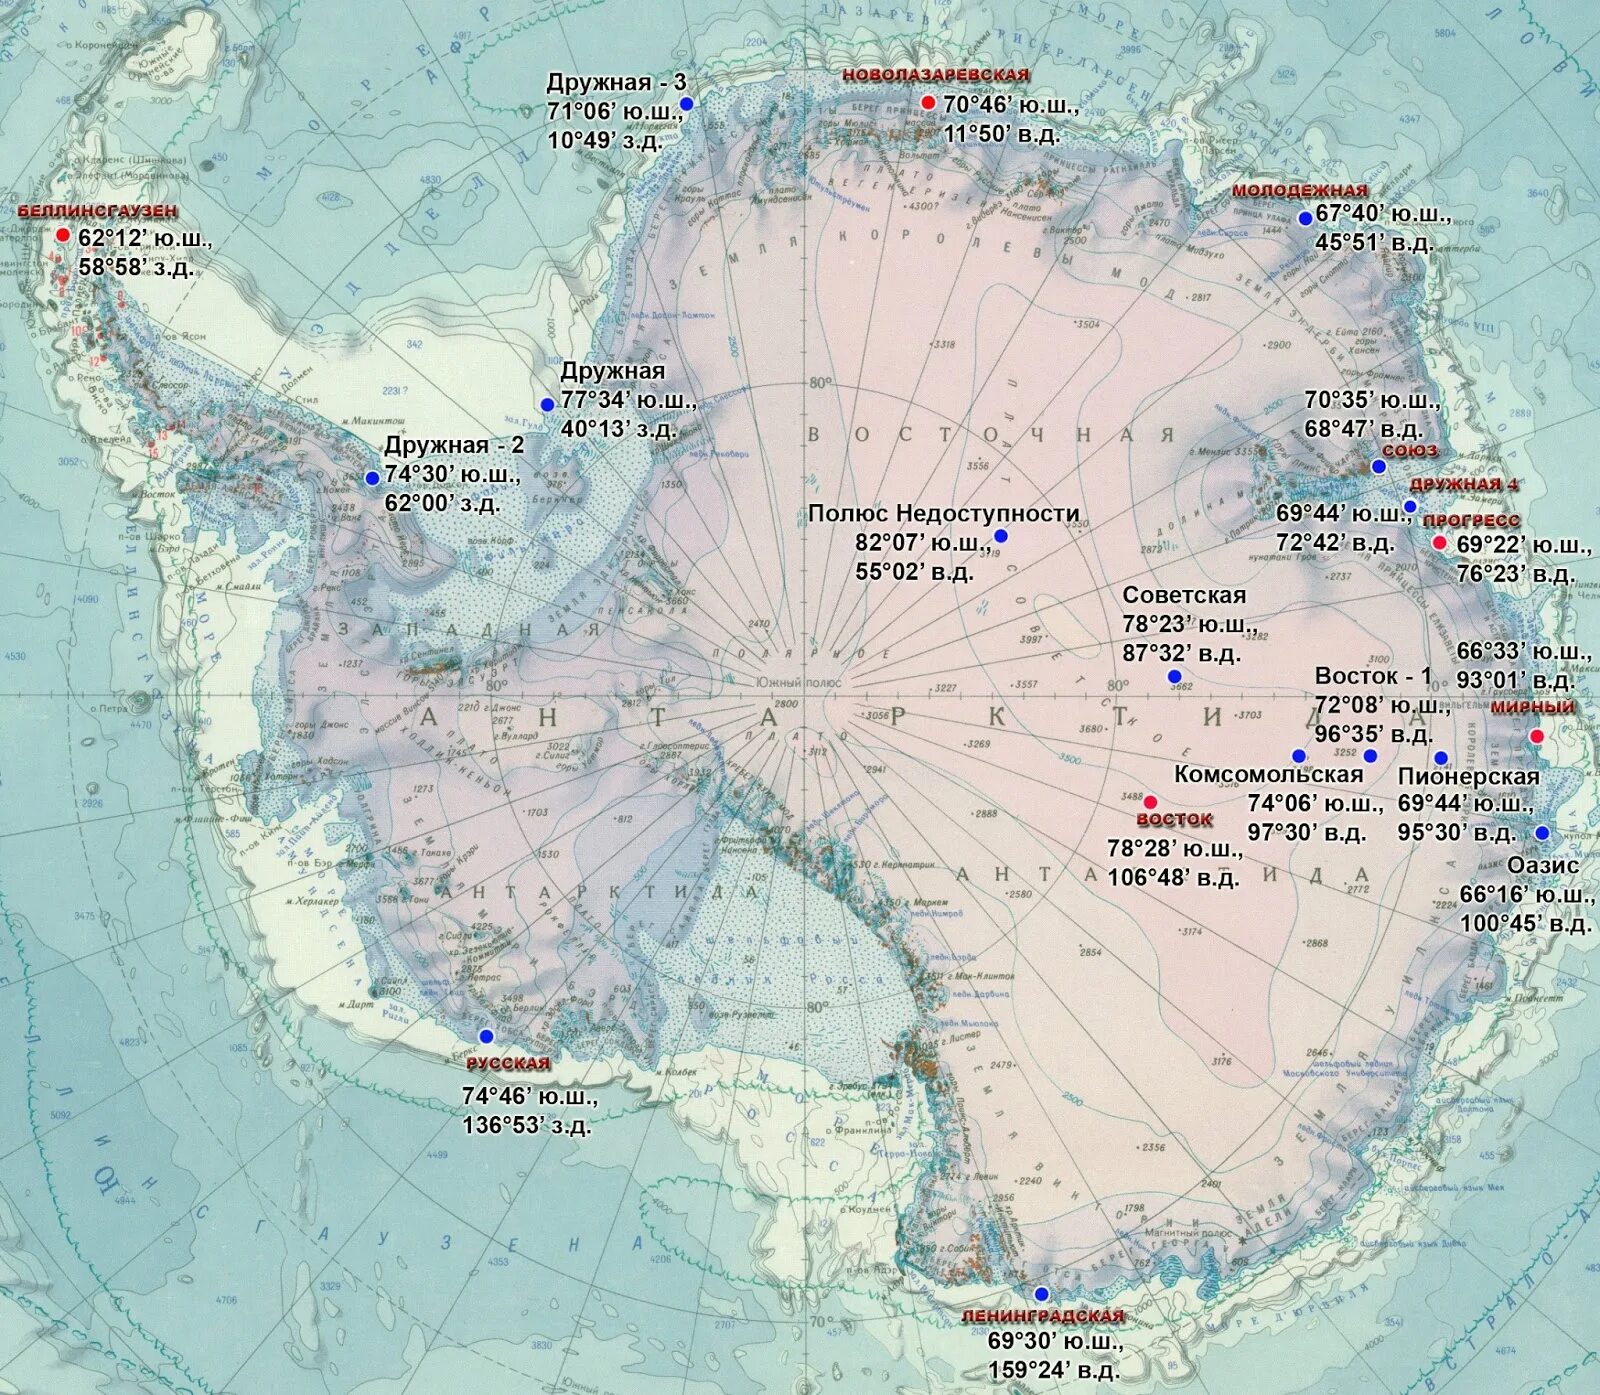 Сколько стран расположено на территории антарктиды. Антарктида станция полюс недоступности на карте. Станция Прогресс в Антарктиде на карте. Южный полюс, полюс недоступности. На карте Антарктиды. Южный полюс недоступности Антарктиды на карте.